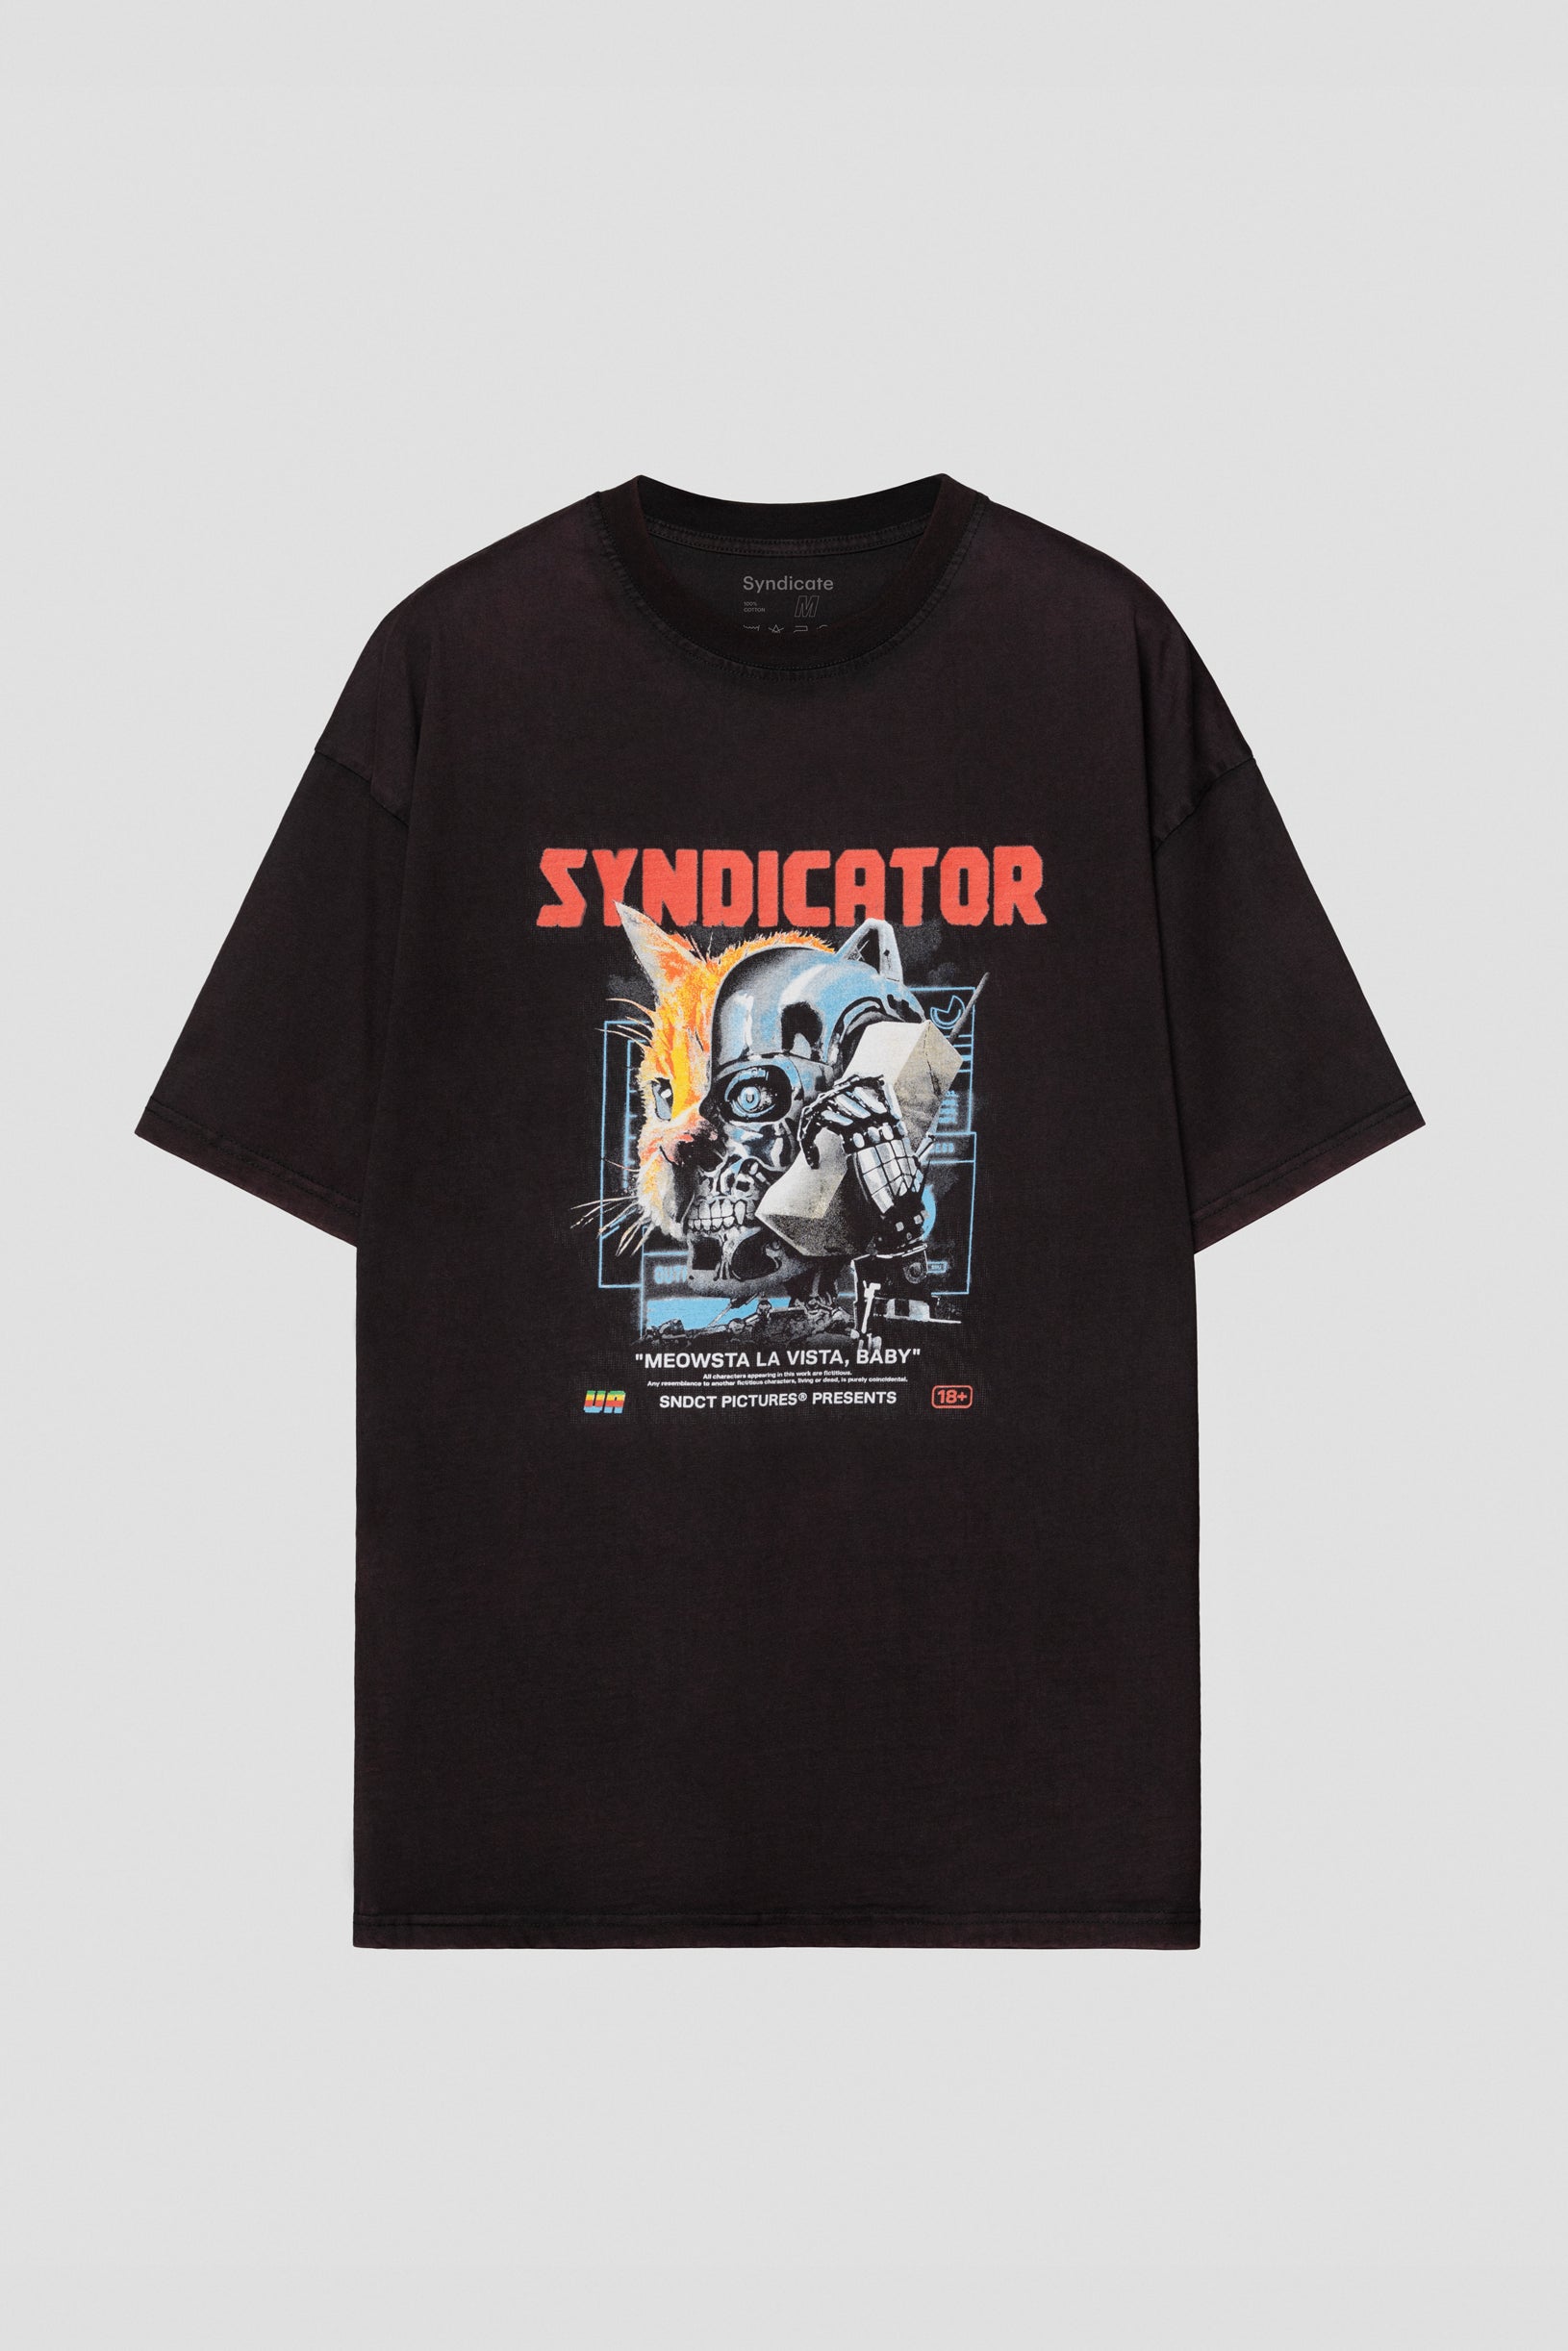 Syndicator oversize worn t-shirt